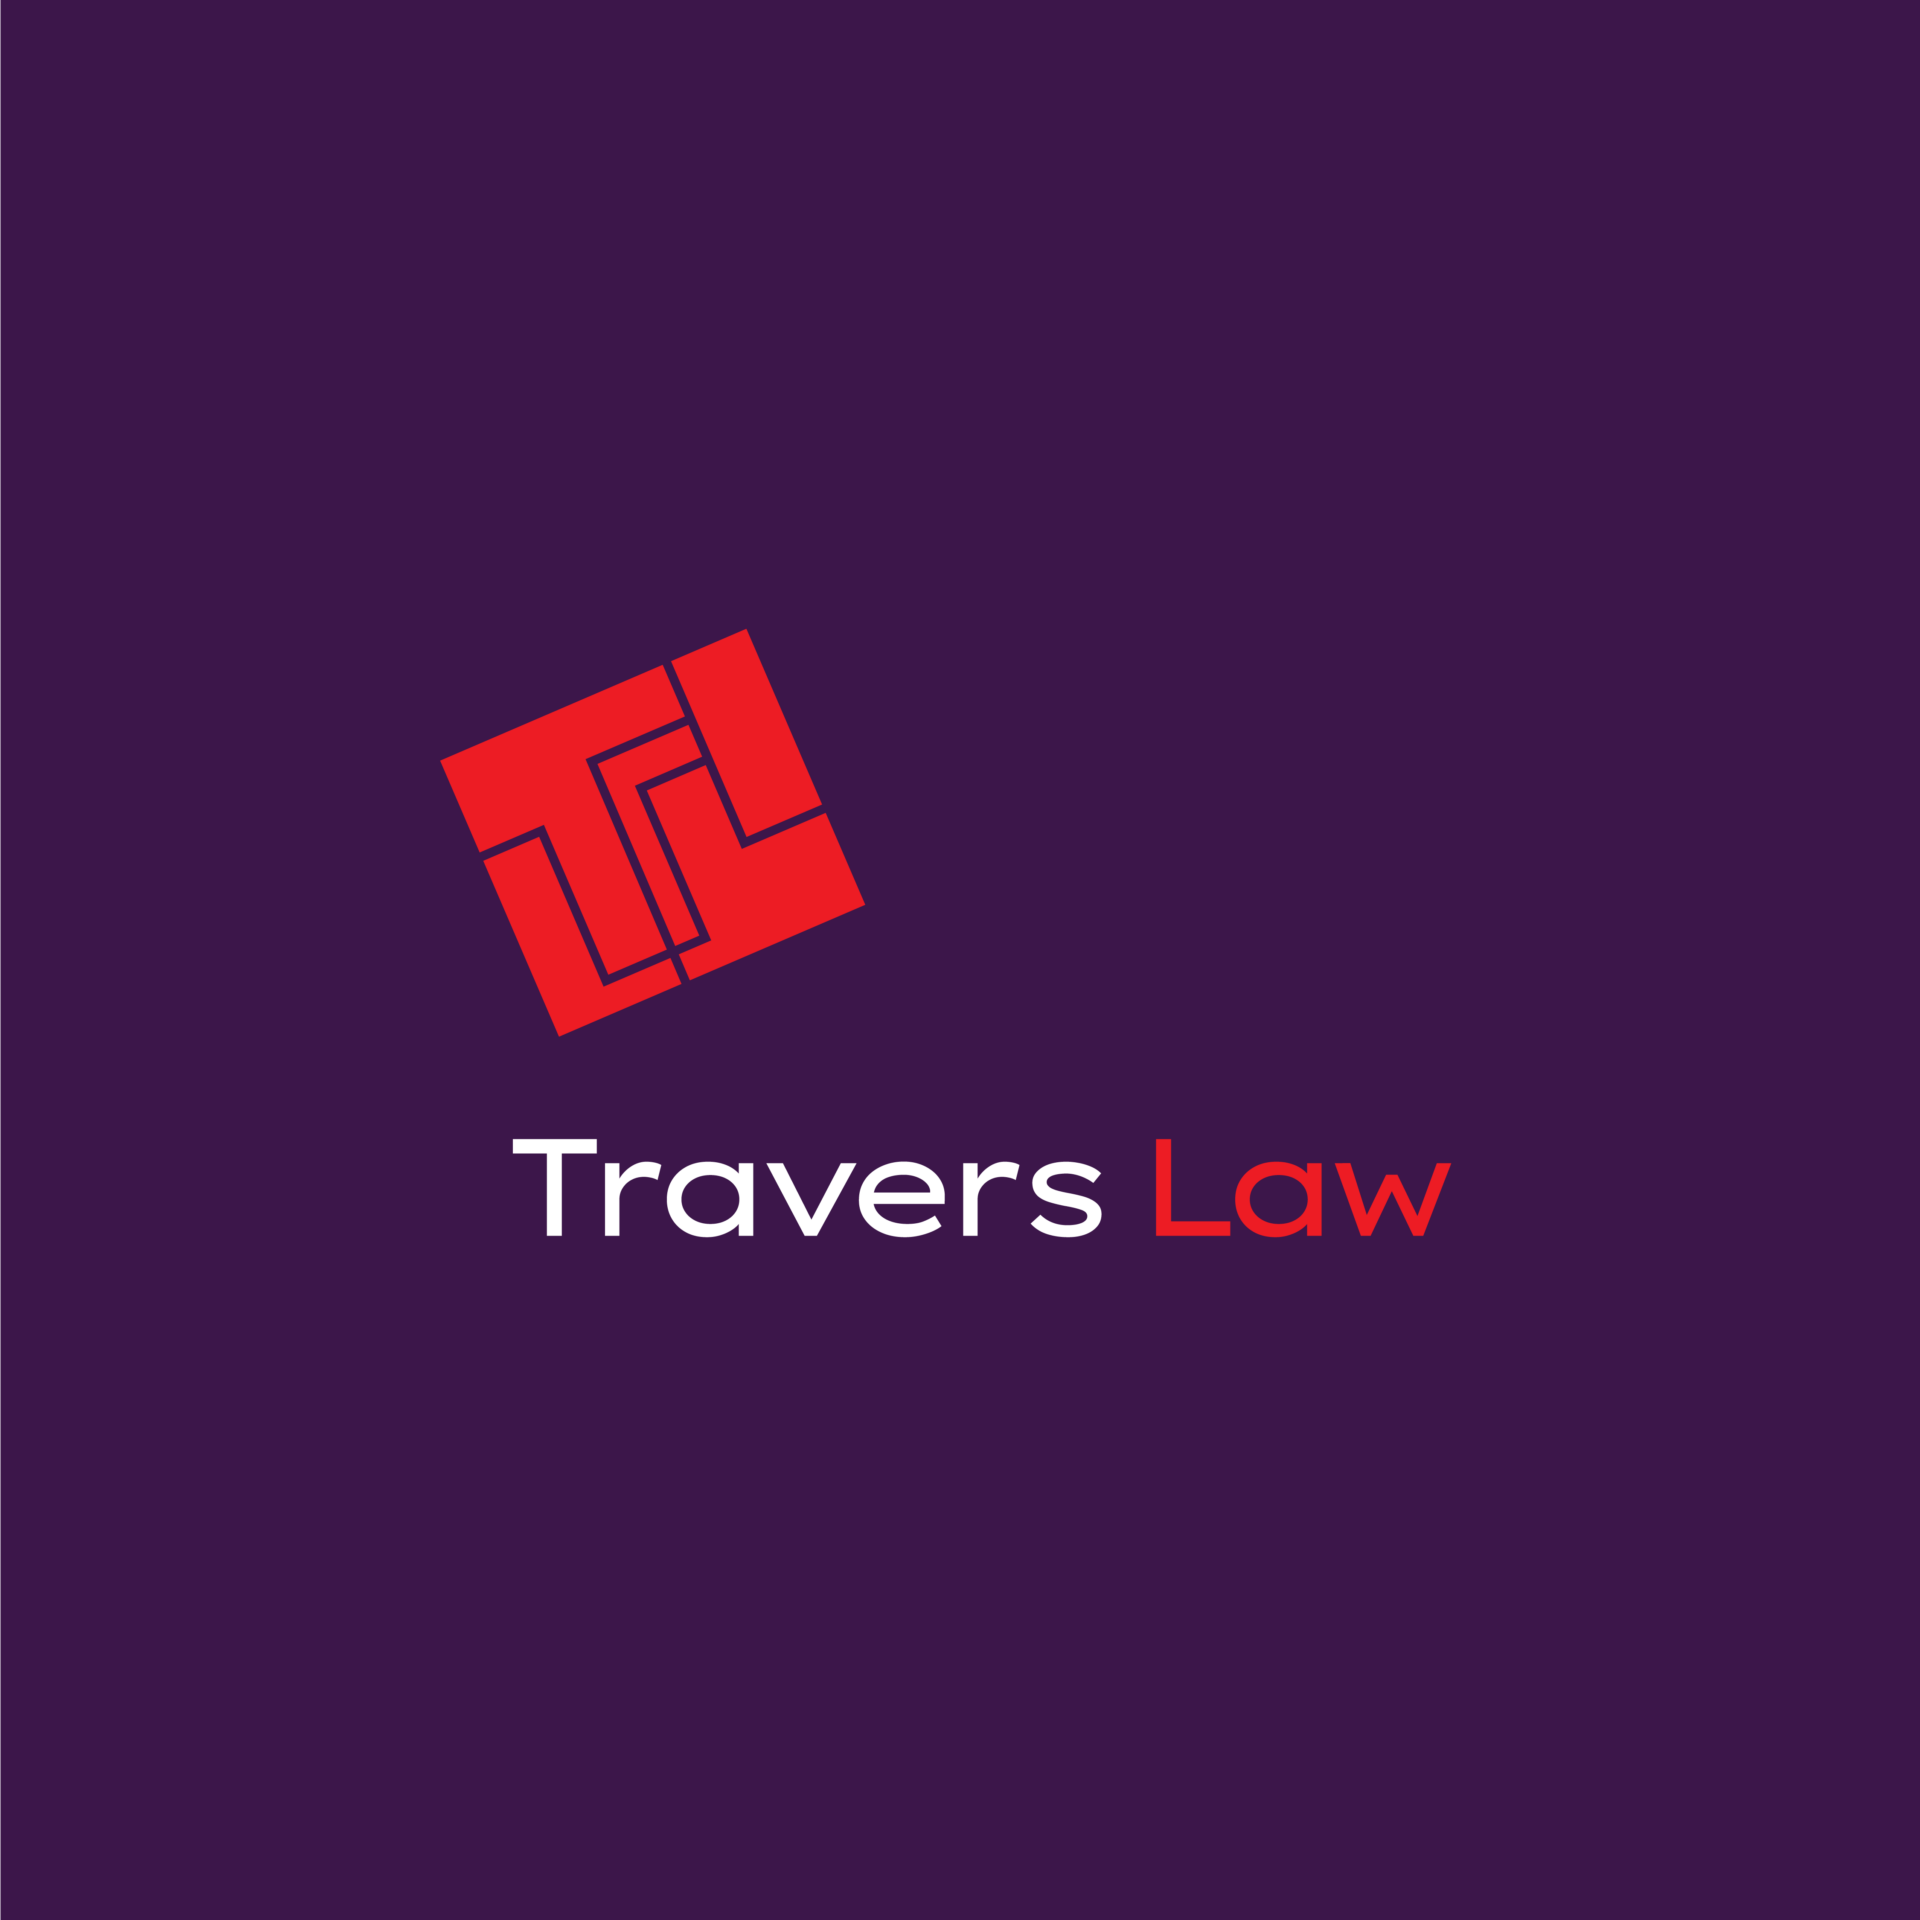 Travers Law full colour logo